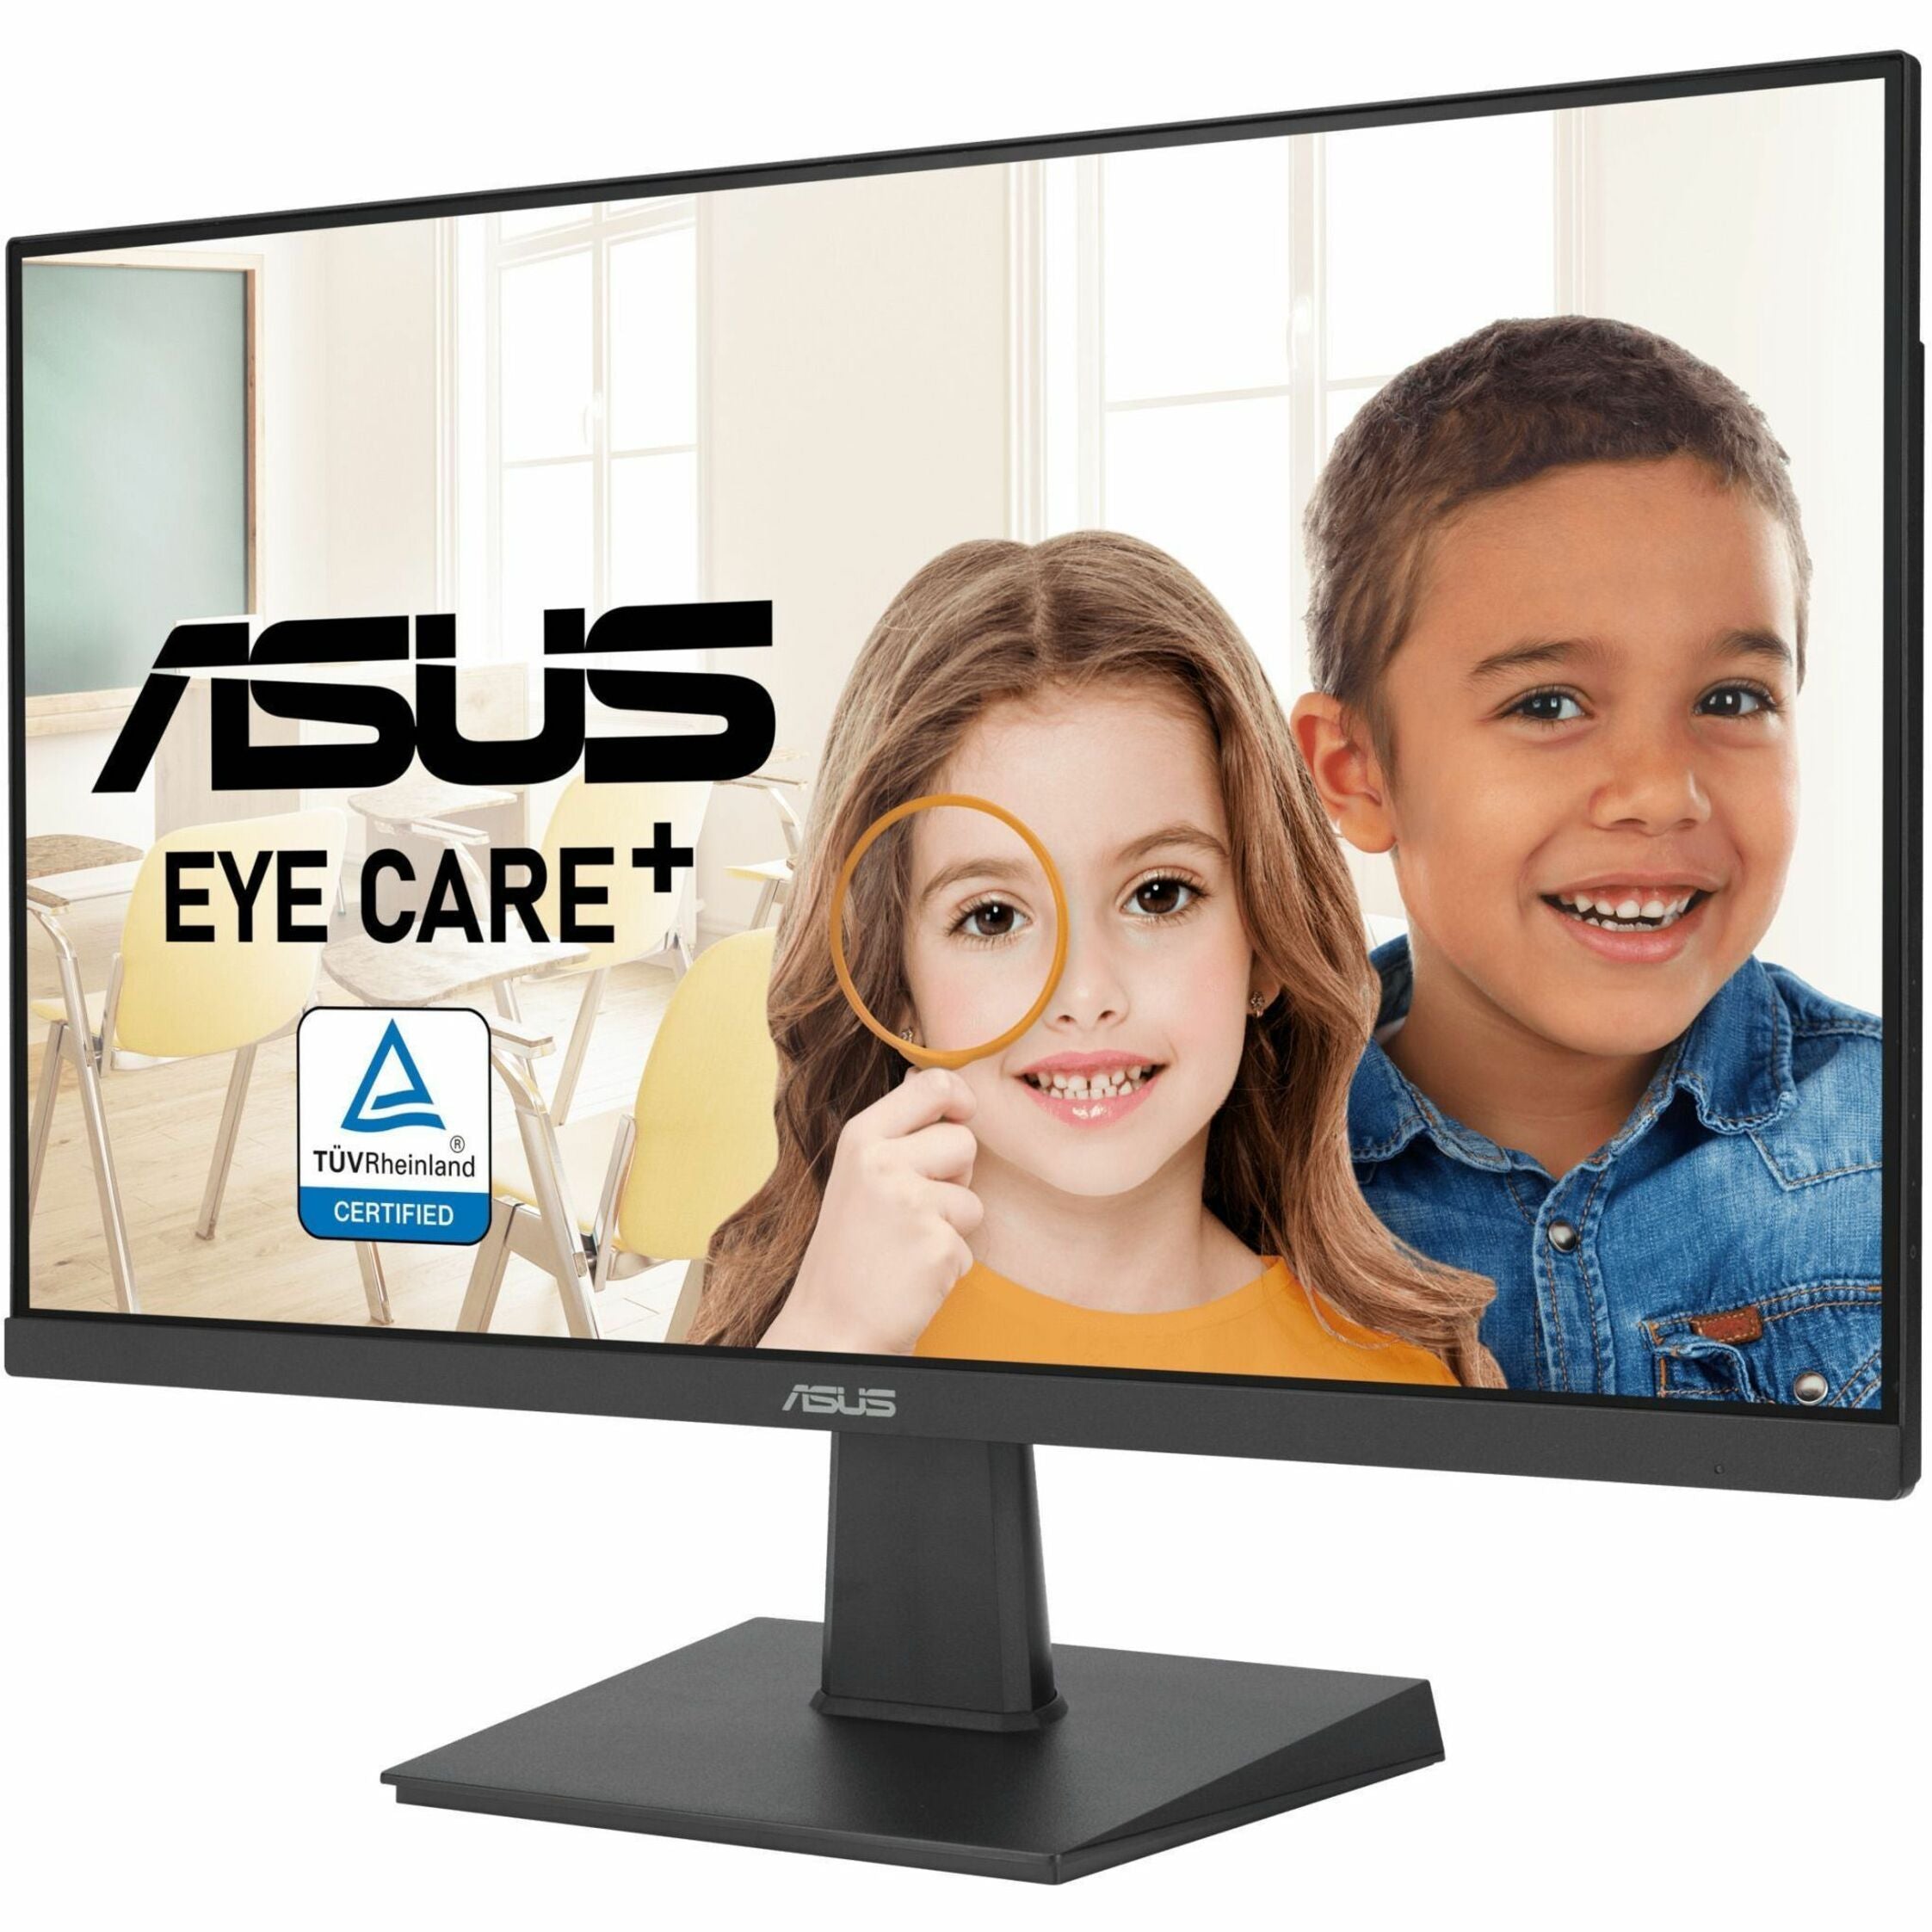 ASUS VA24EHF Widescreen Gaming LED Monitor, Full HD 23.8